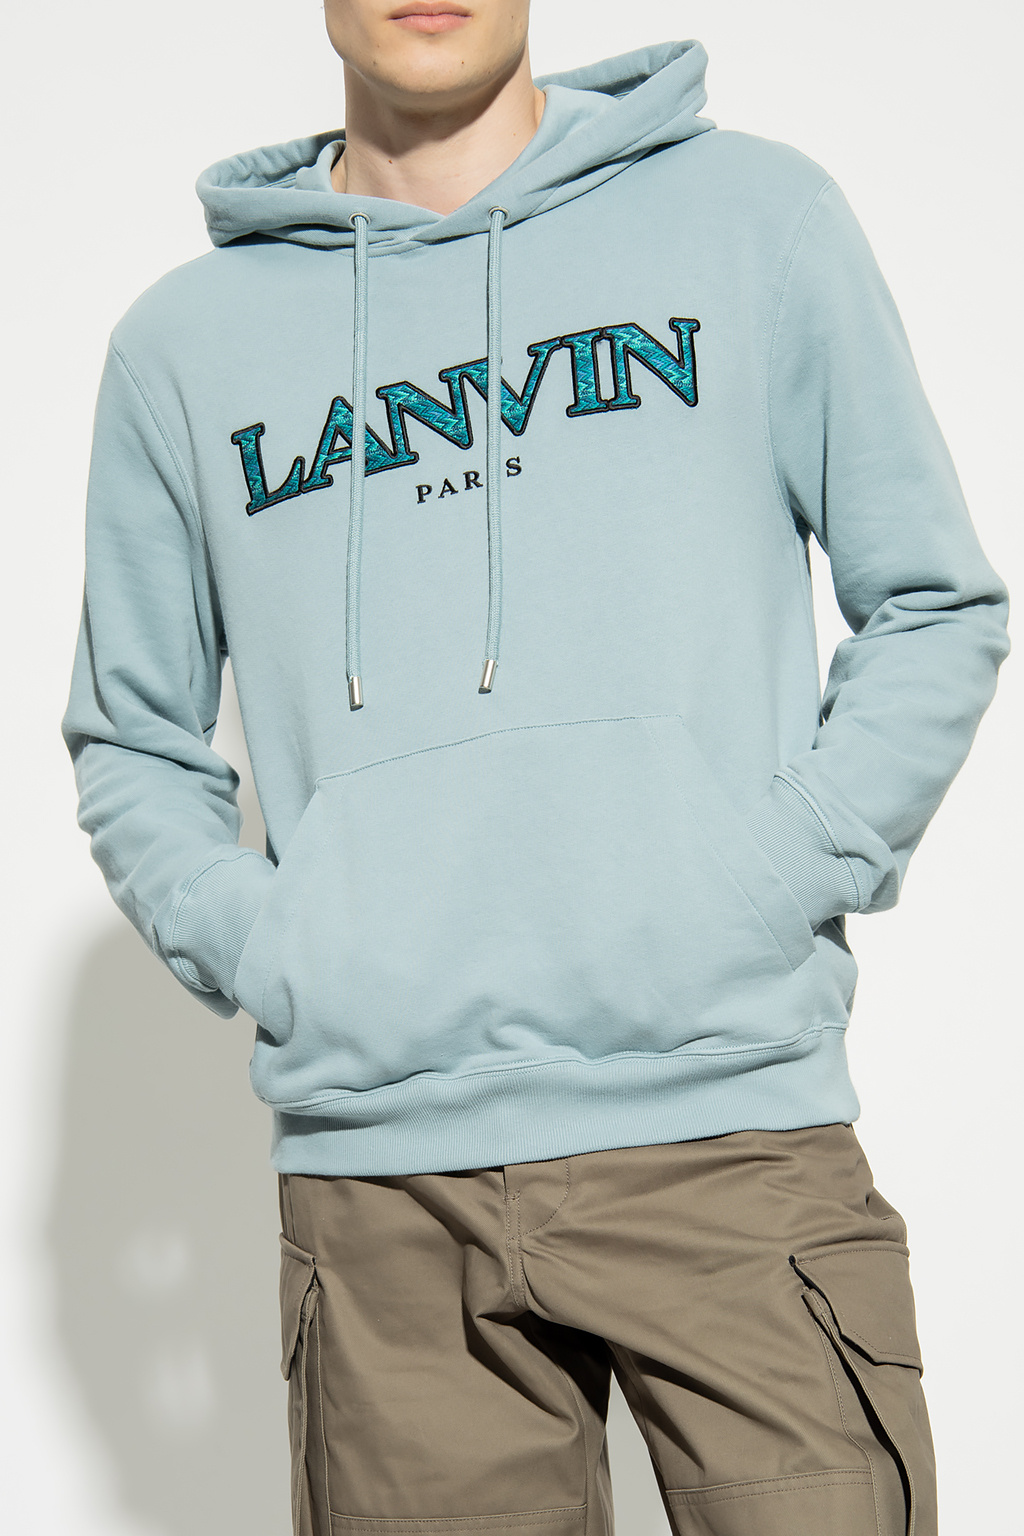 Lanvin Logo hoodie